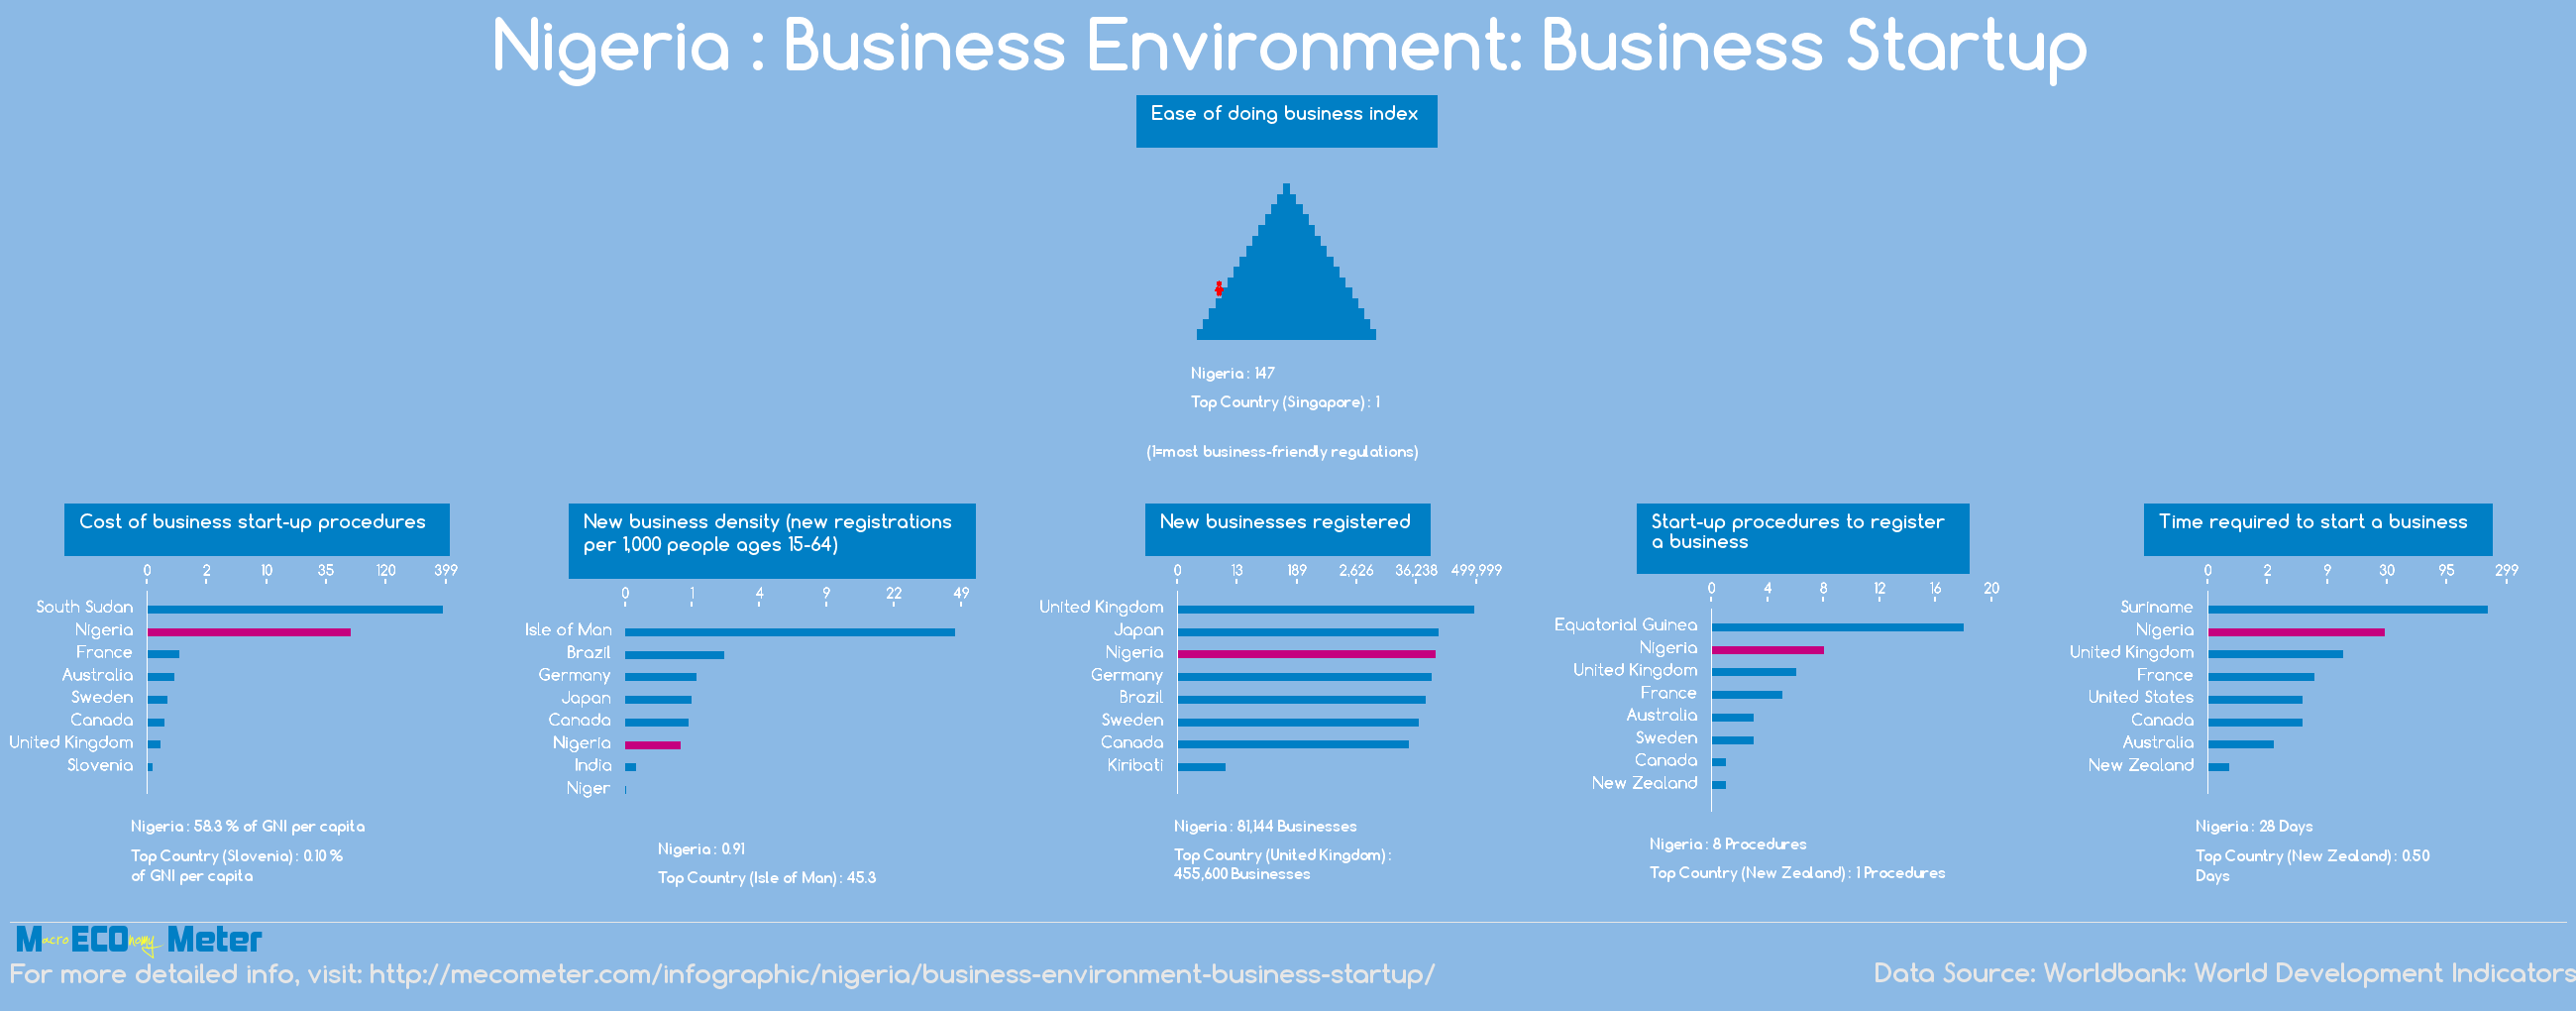 Nigeria : Business Environment: Business Startup